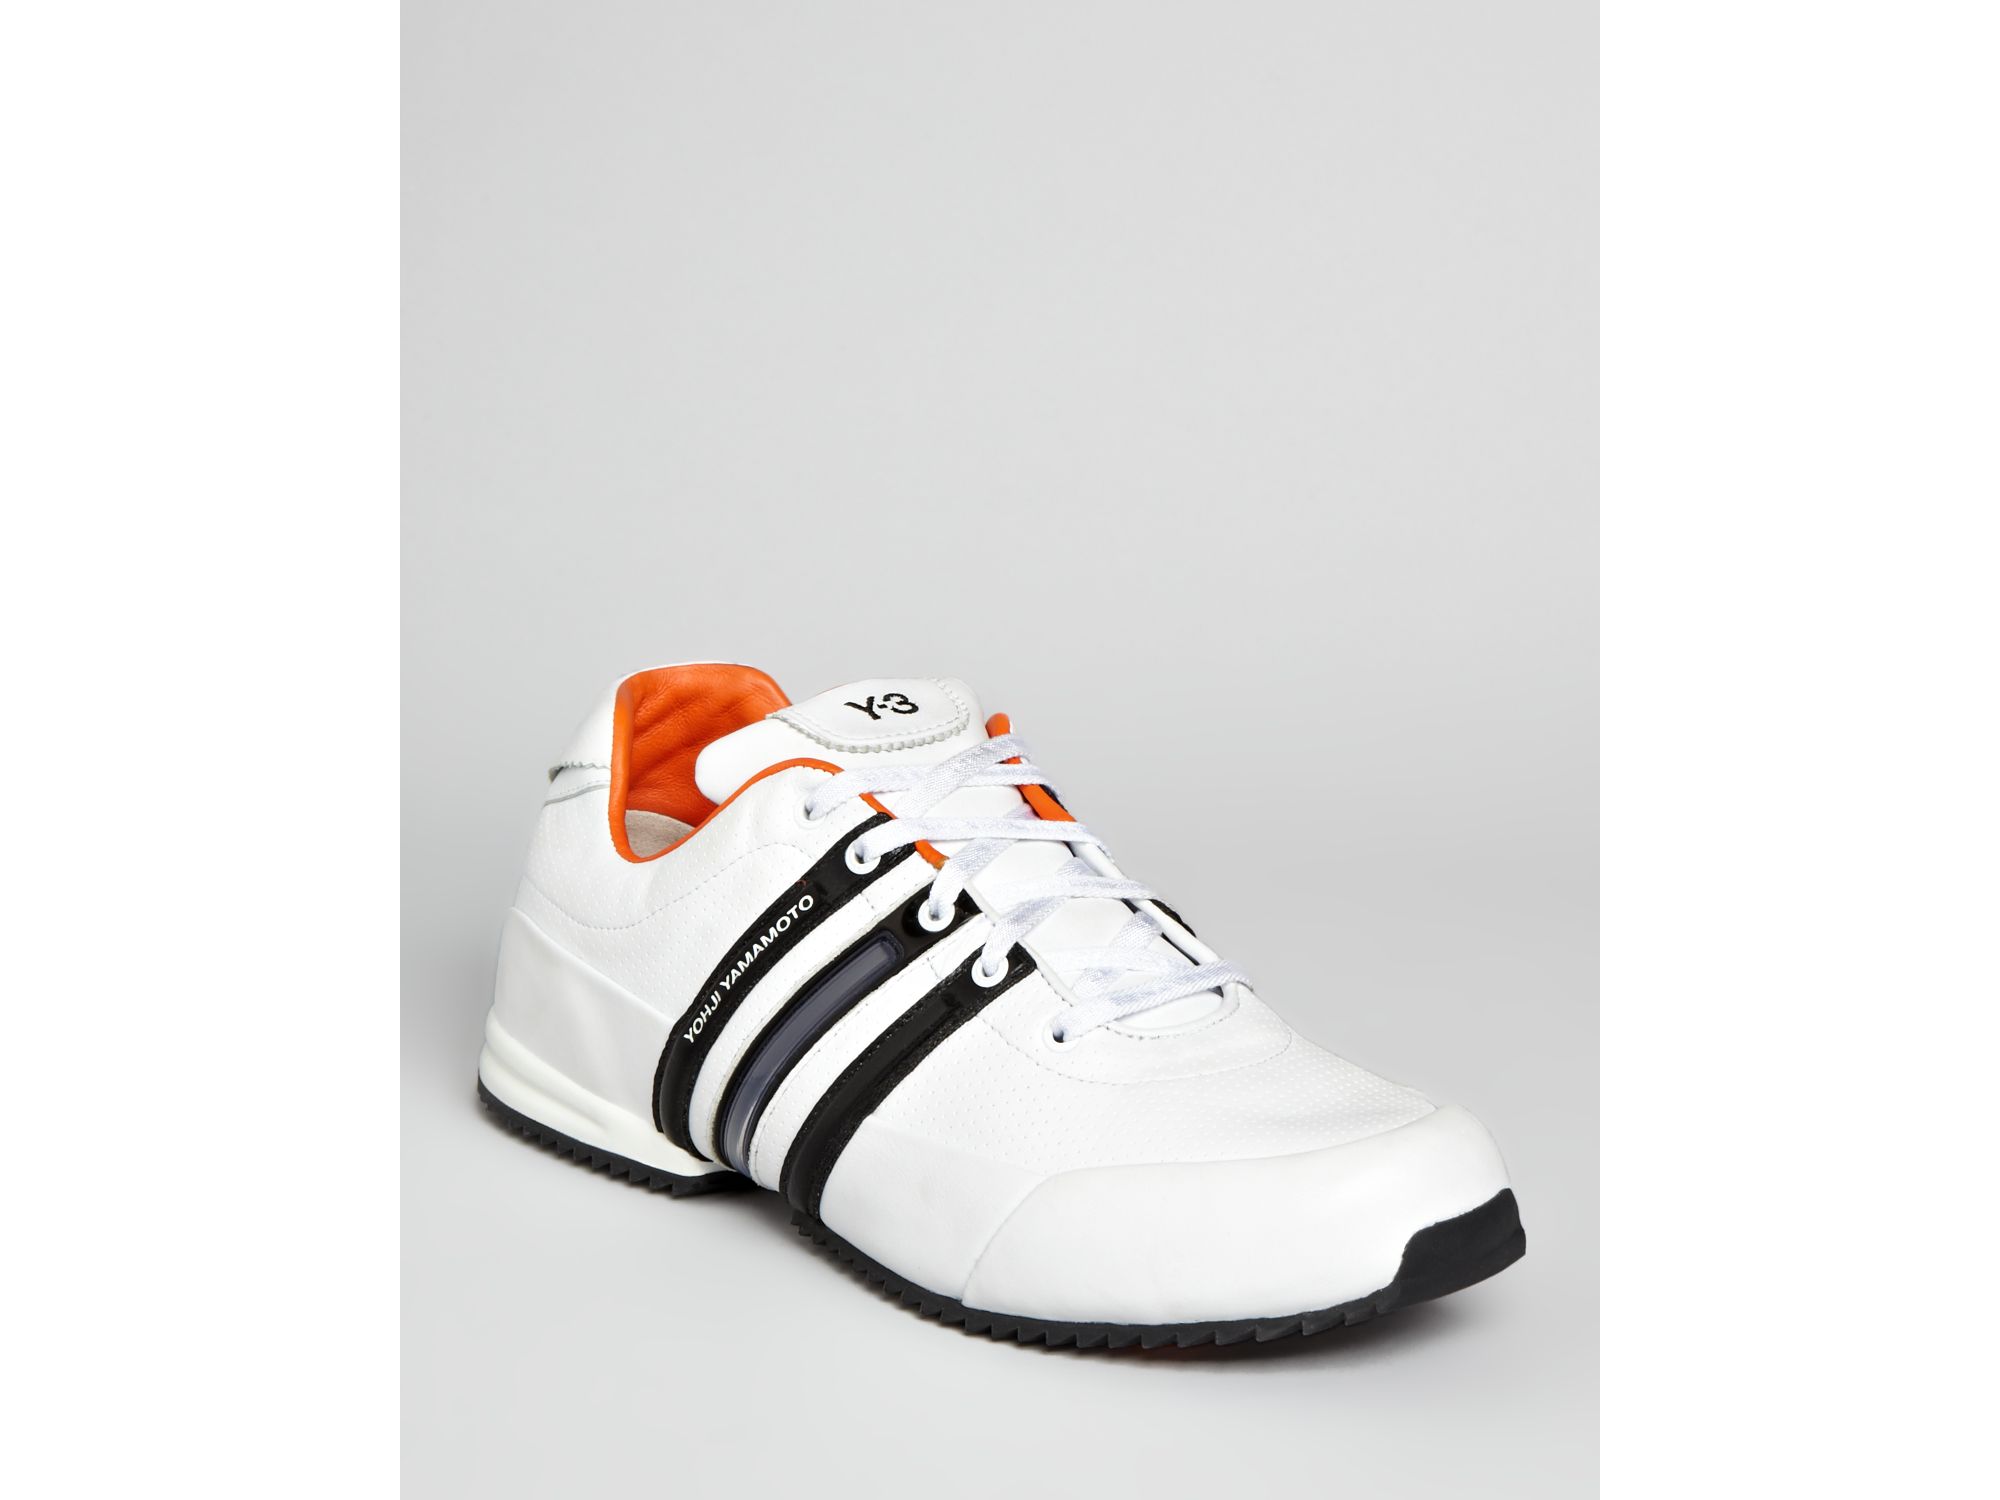 Y-3 Sprint Classic Sneakers in White Black Orange (White) for Men | Lyst